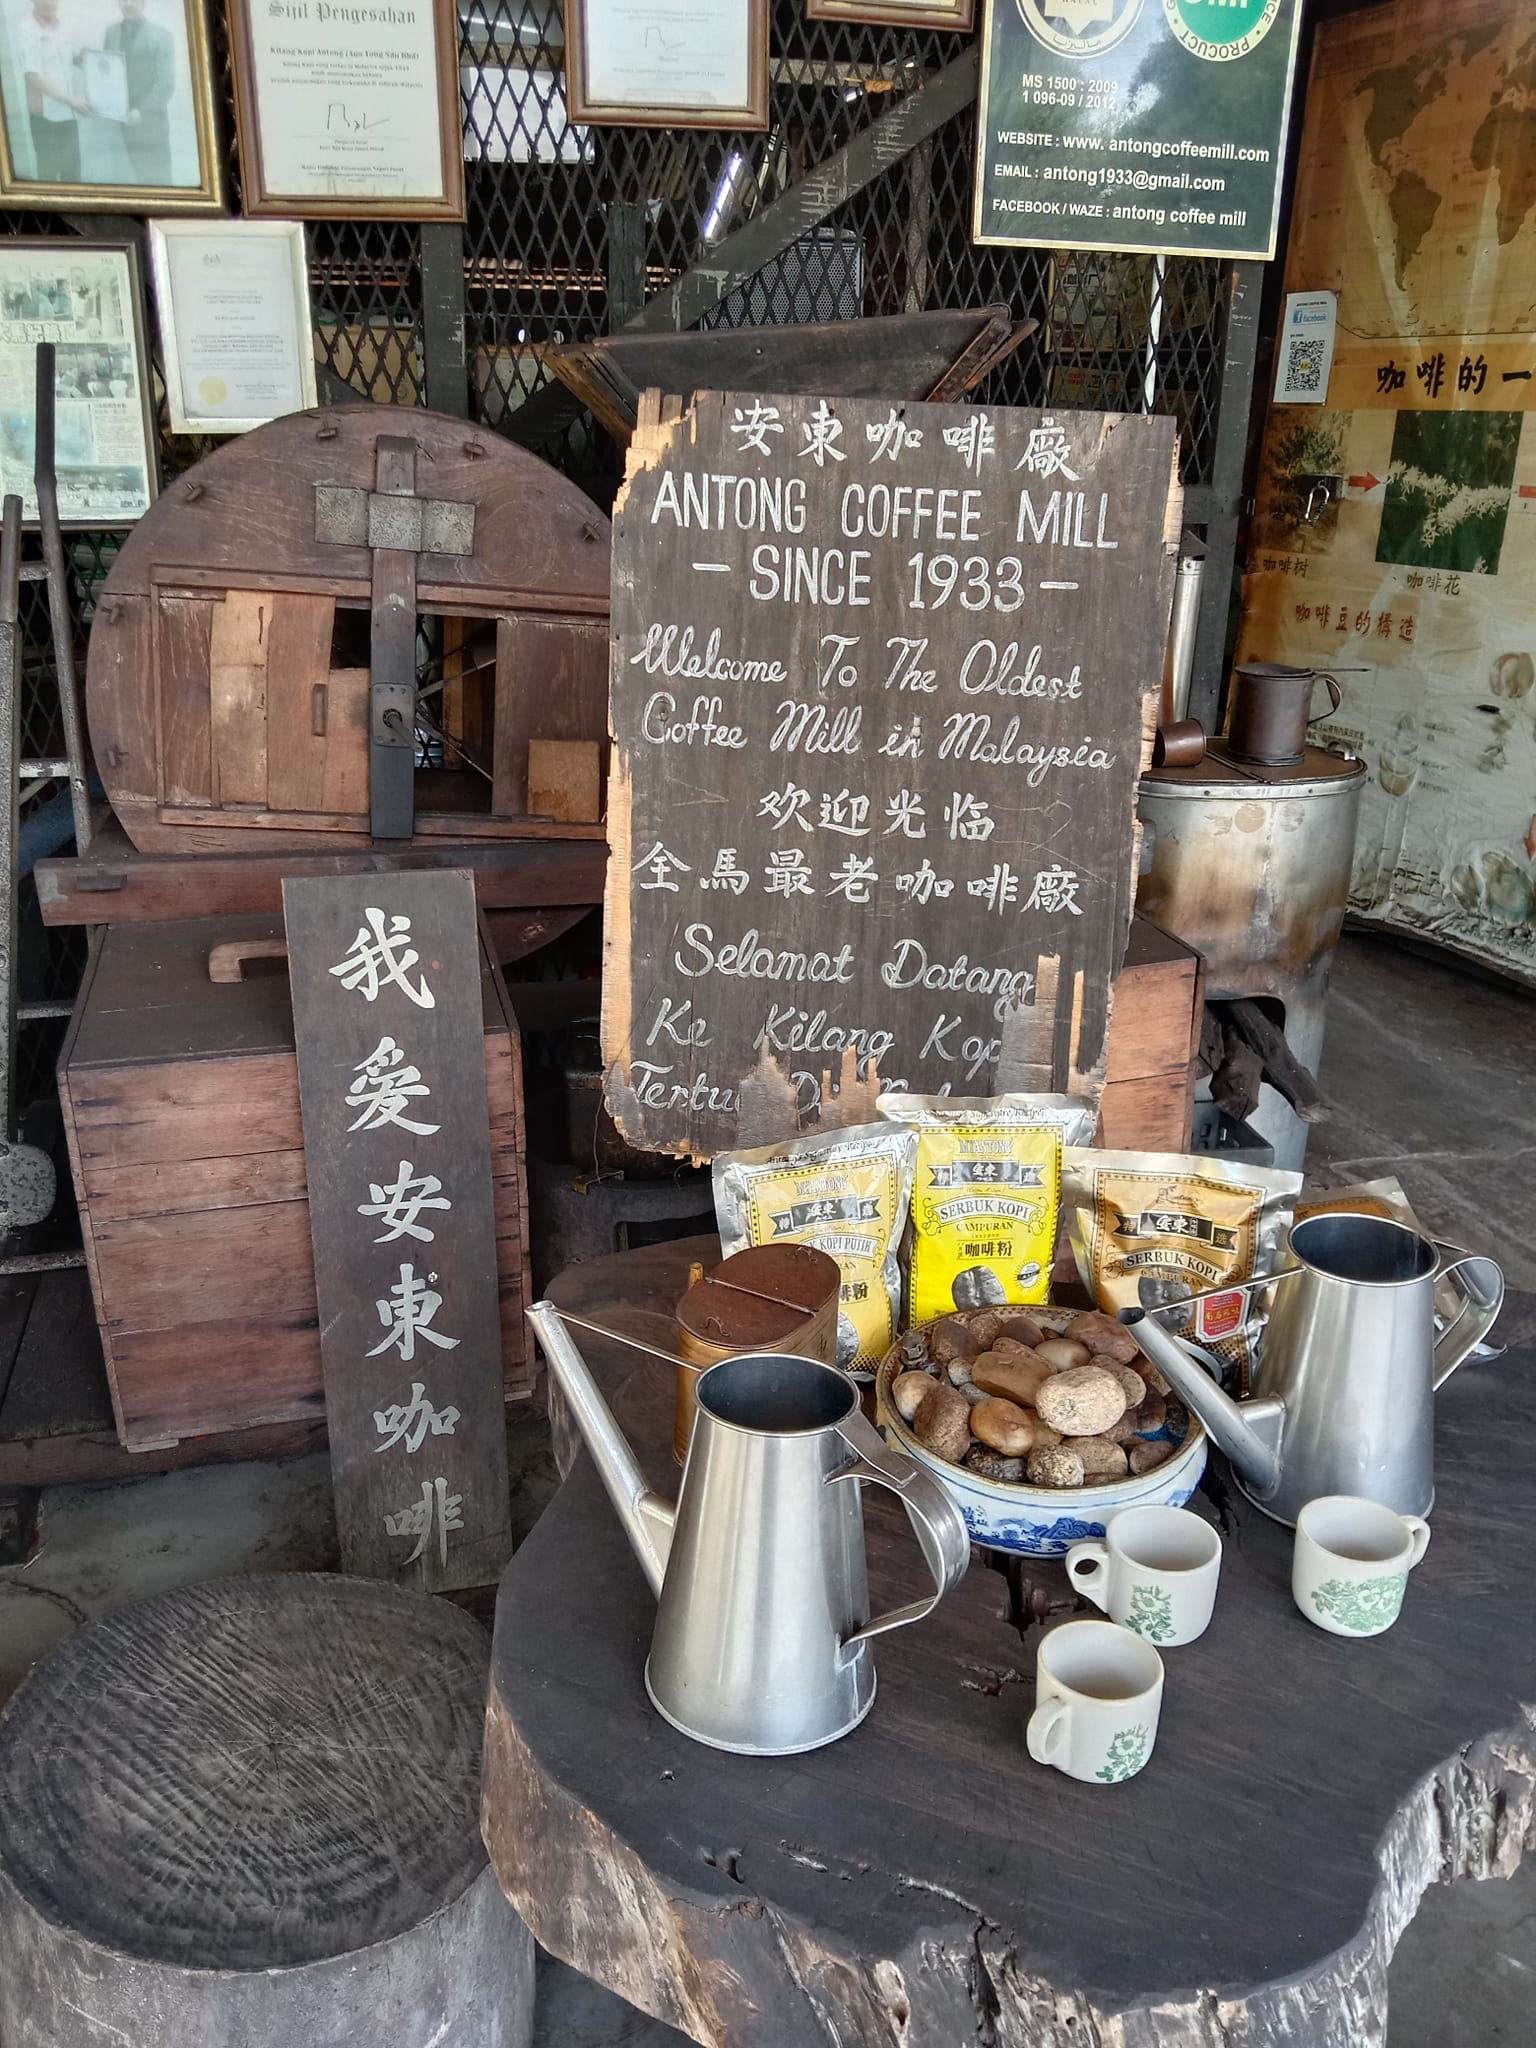 Antong Coffee Factory